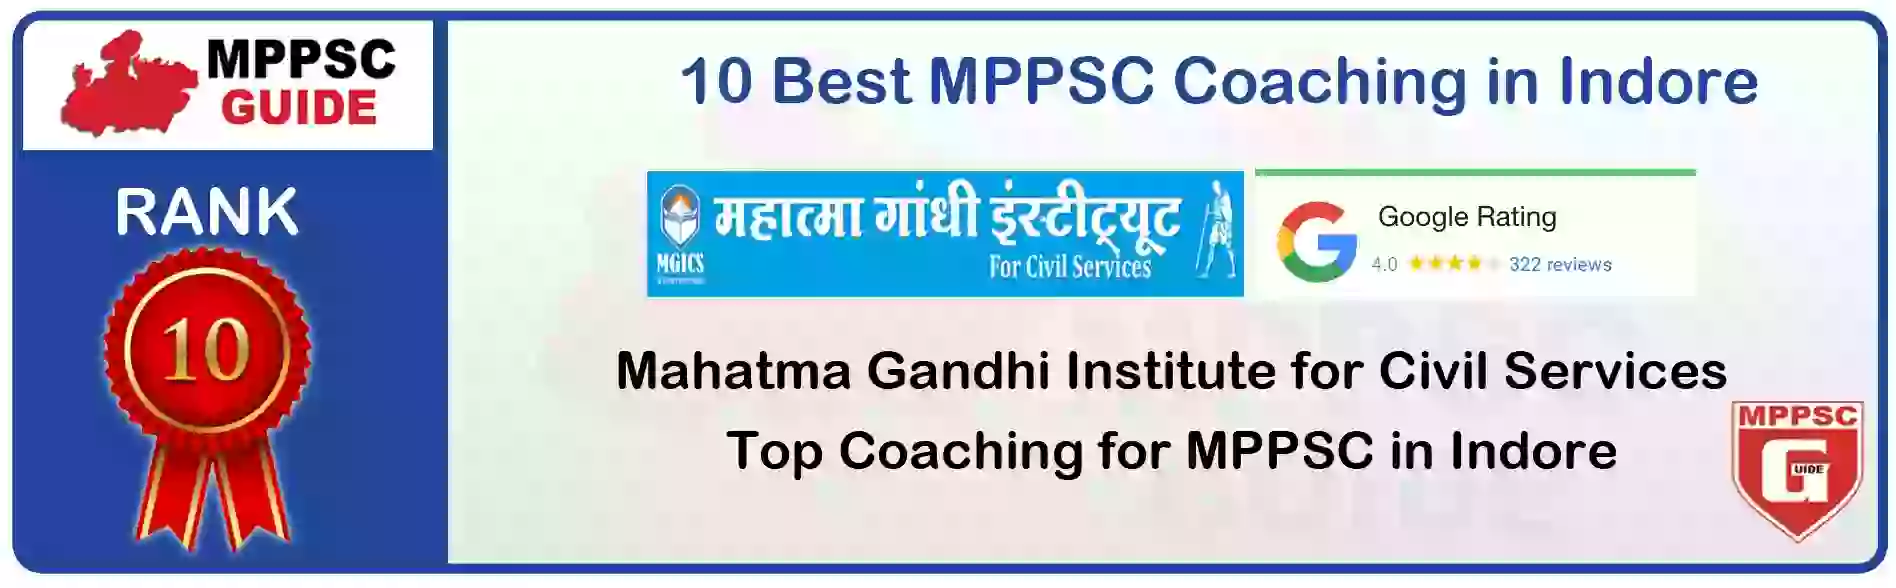 MPPSC Coaching in Neemuch, MPPSC Coaching Institute In Neemuch, Best MPPSC Coaching in Neemuch, Top 10 MPPSC Coaching In Neemuch, best mppsc coaching institute in neemuch, MPPSC Coaching Classes In Neemuch, MPPSC Online Coaching In Neemuch, mppsc coaching in Neemuch bhanwarkua